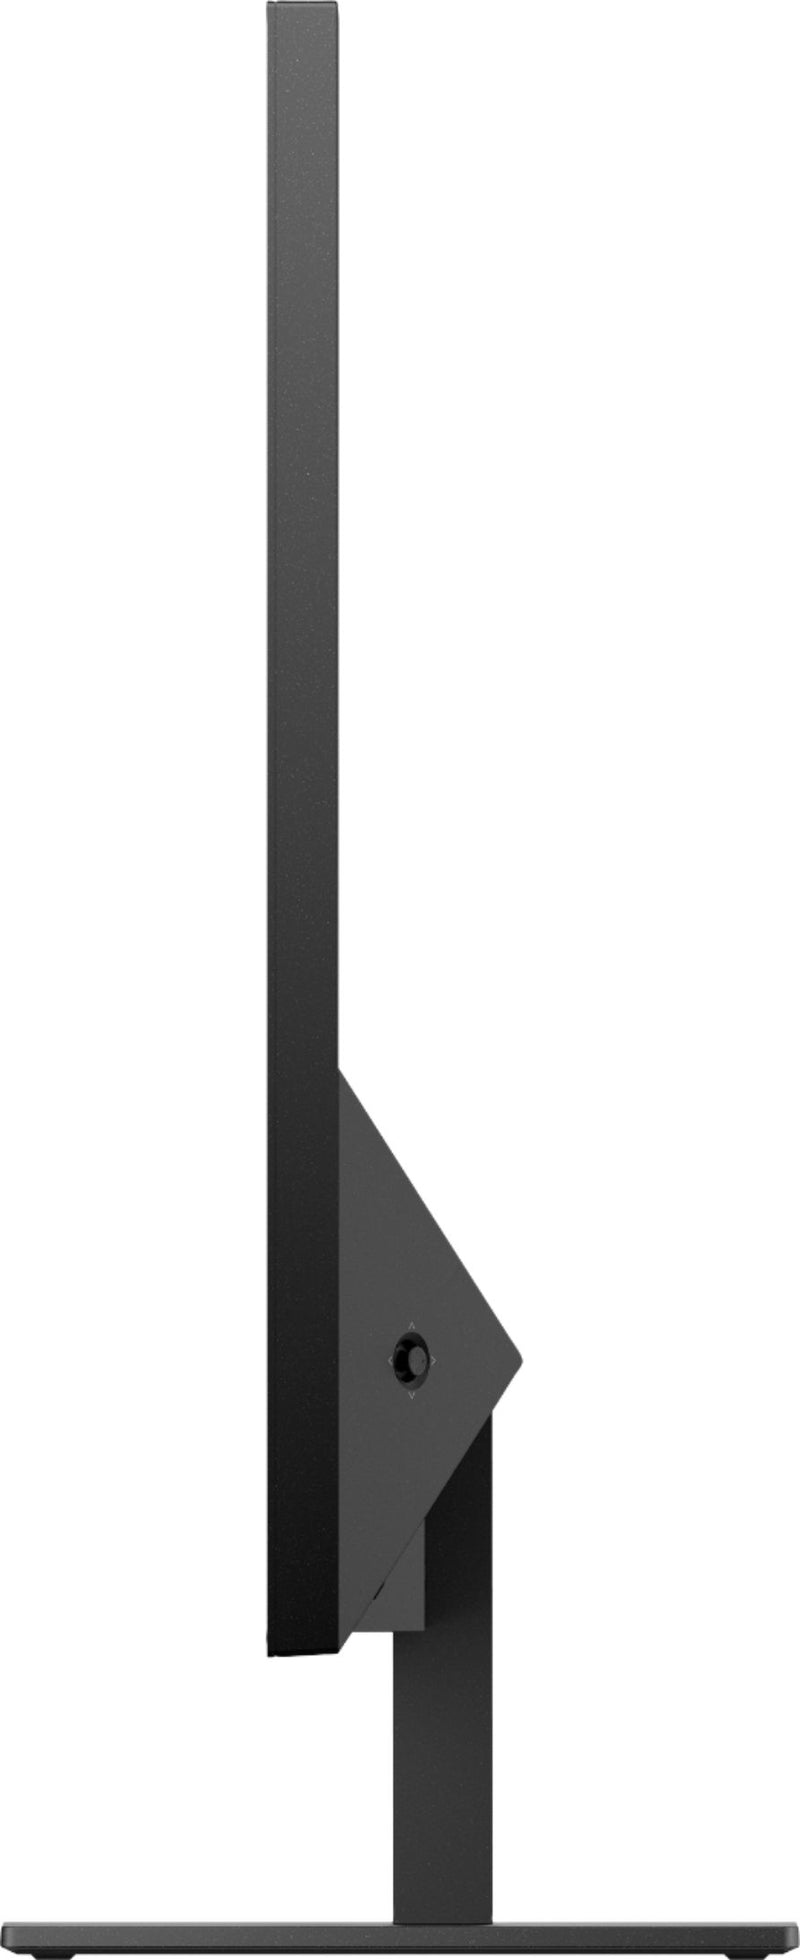 HP Pavilion 32" LED QHD Monitor (DisplayPort, HDMI) - Black 4WH45AA